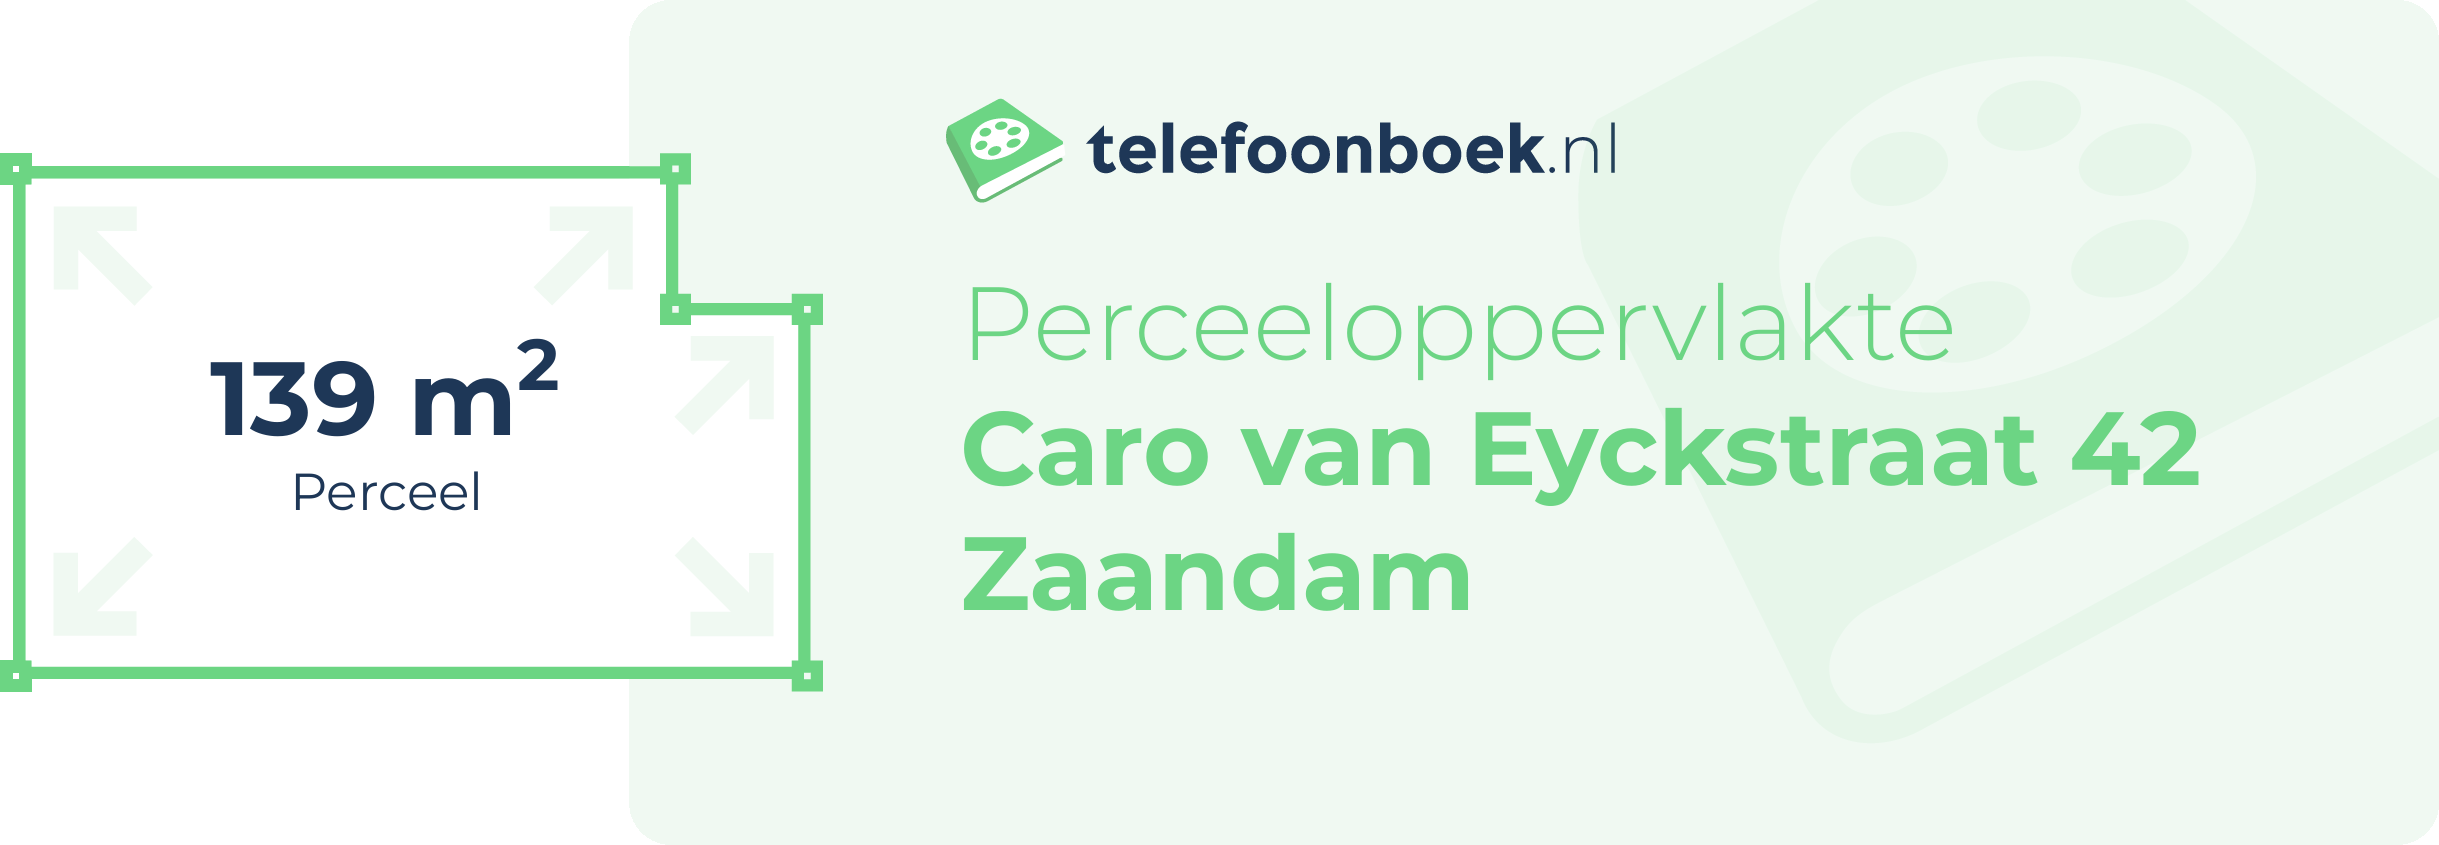 Perceeloppervlakte Caro Van Eyckstraat 42 Zaandam